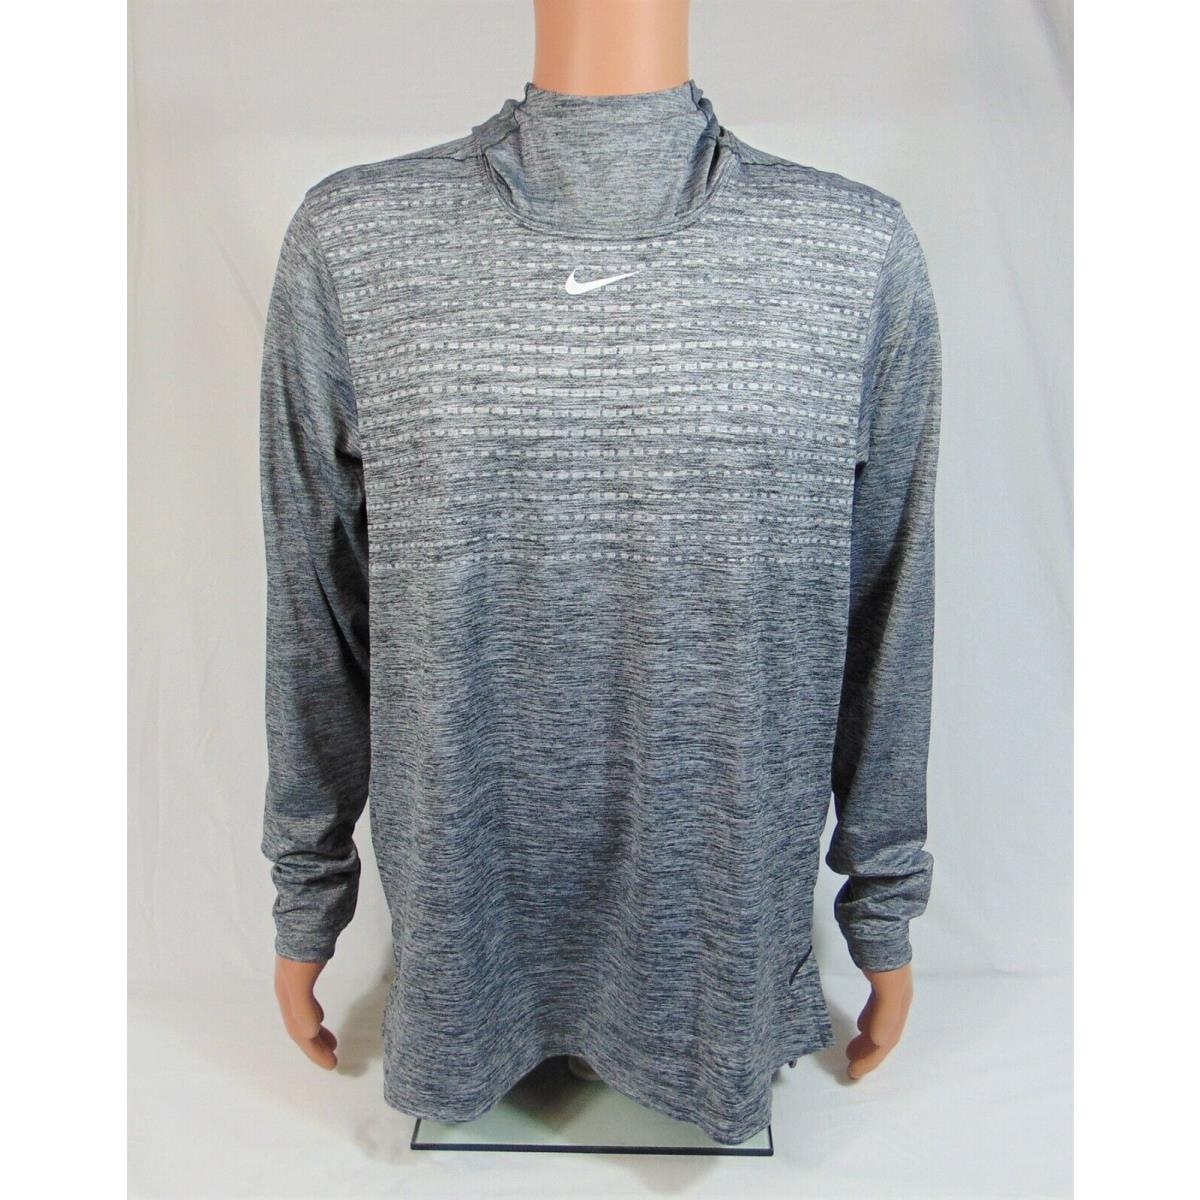 Nike Performance Football Grey Hoodie Long Sleeve Shirt Sz L AO5918 010